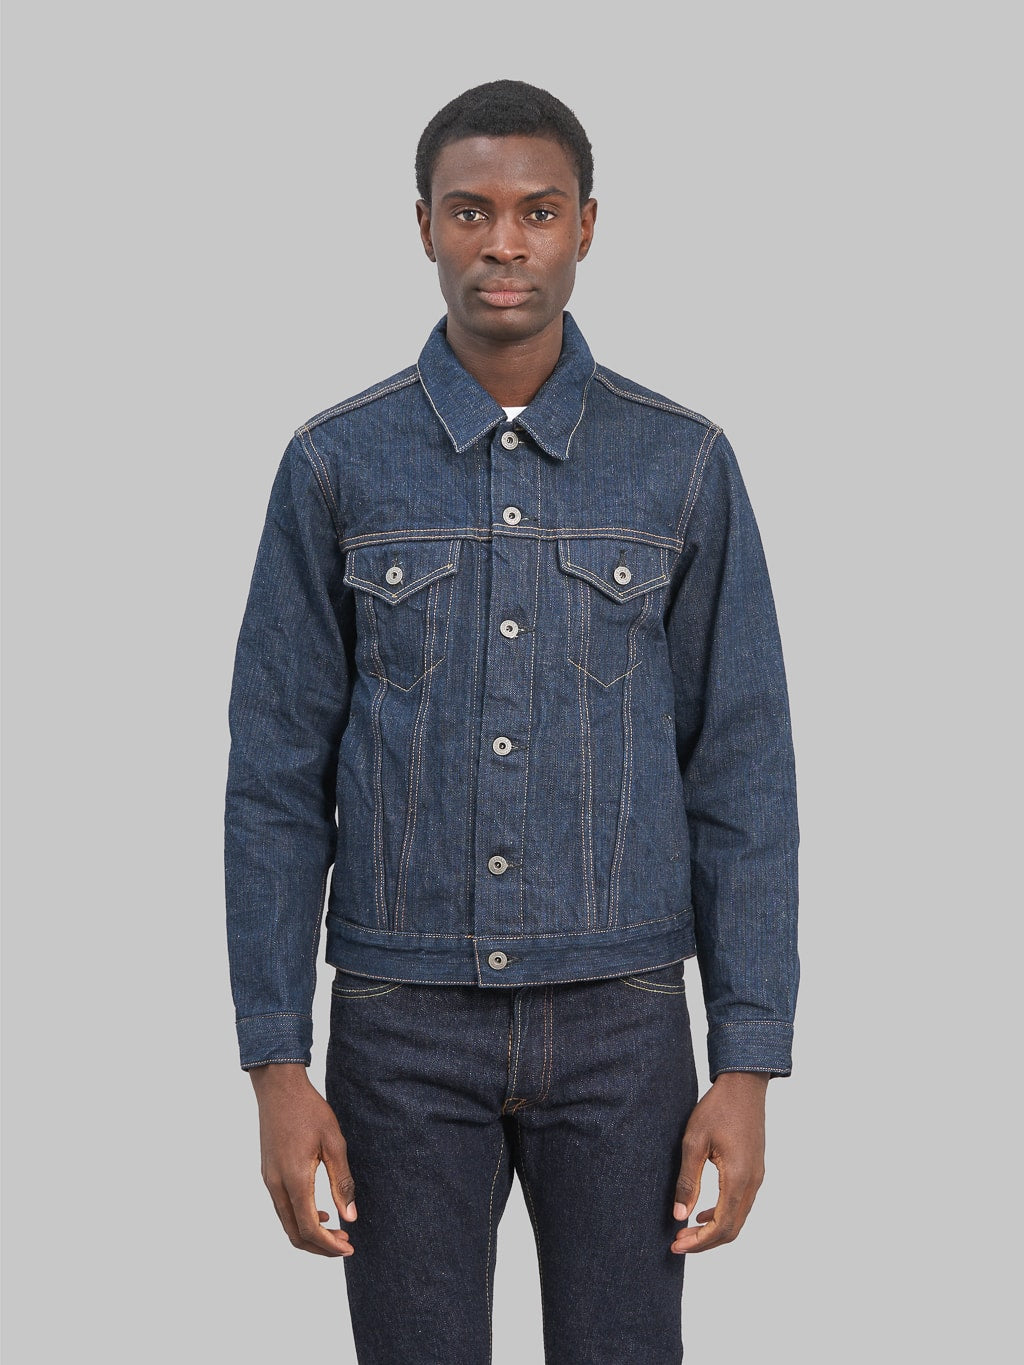 oni denim kiwami 16oz natural indigo type III jacket model fit